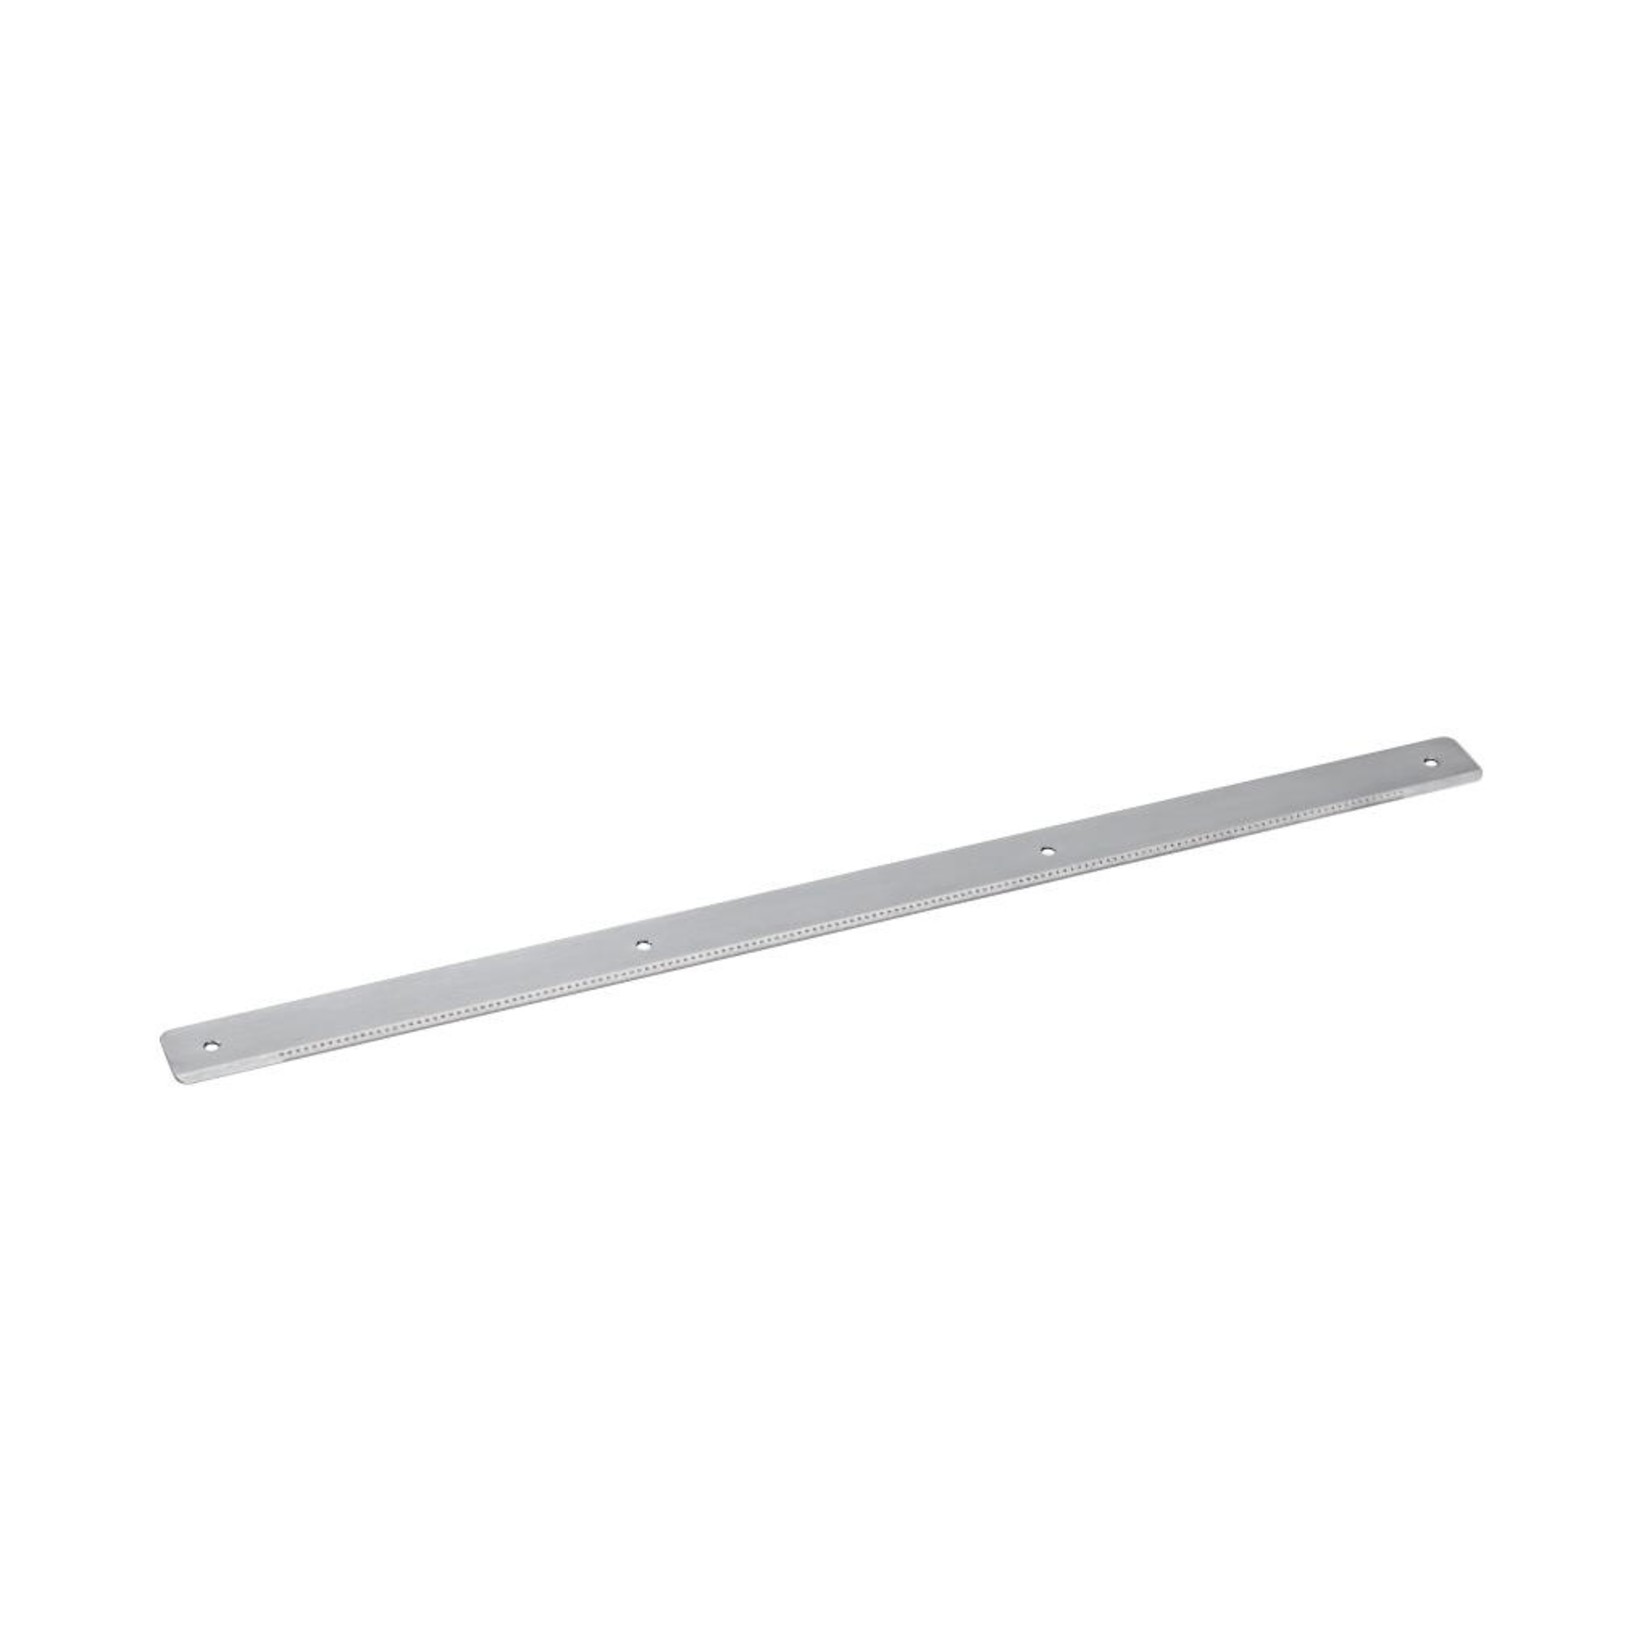 Metal rulers RL-OA with graduation 0.1 mm